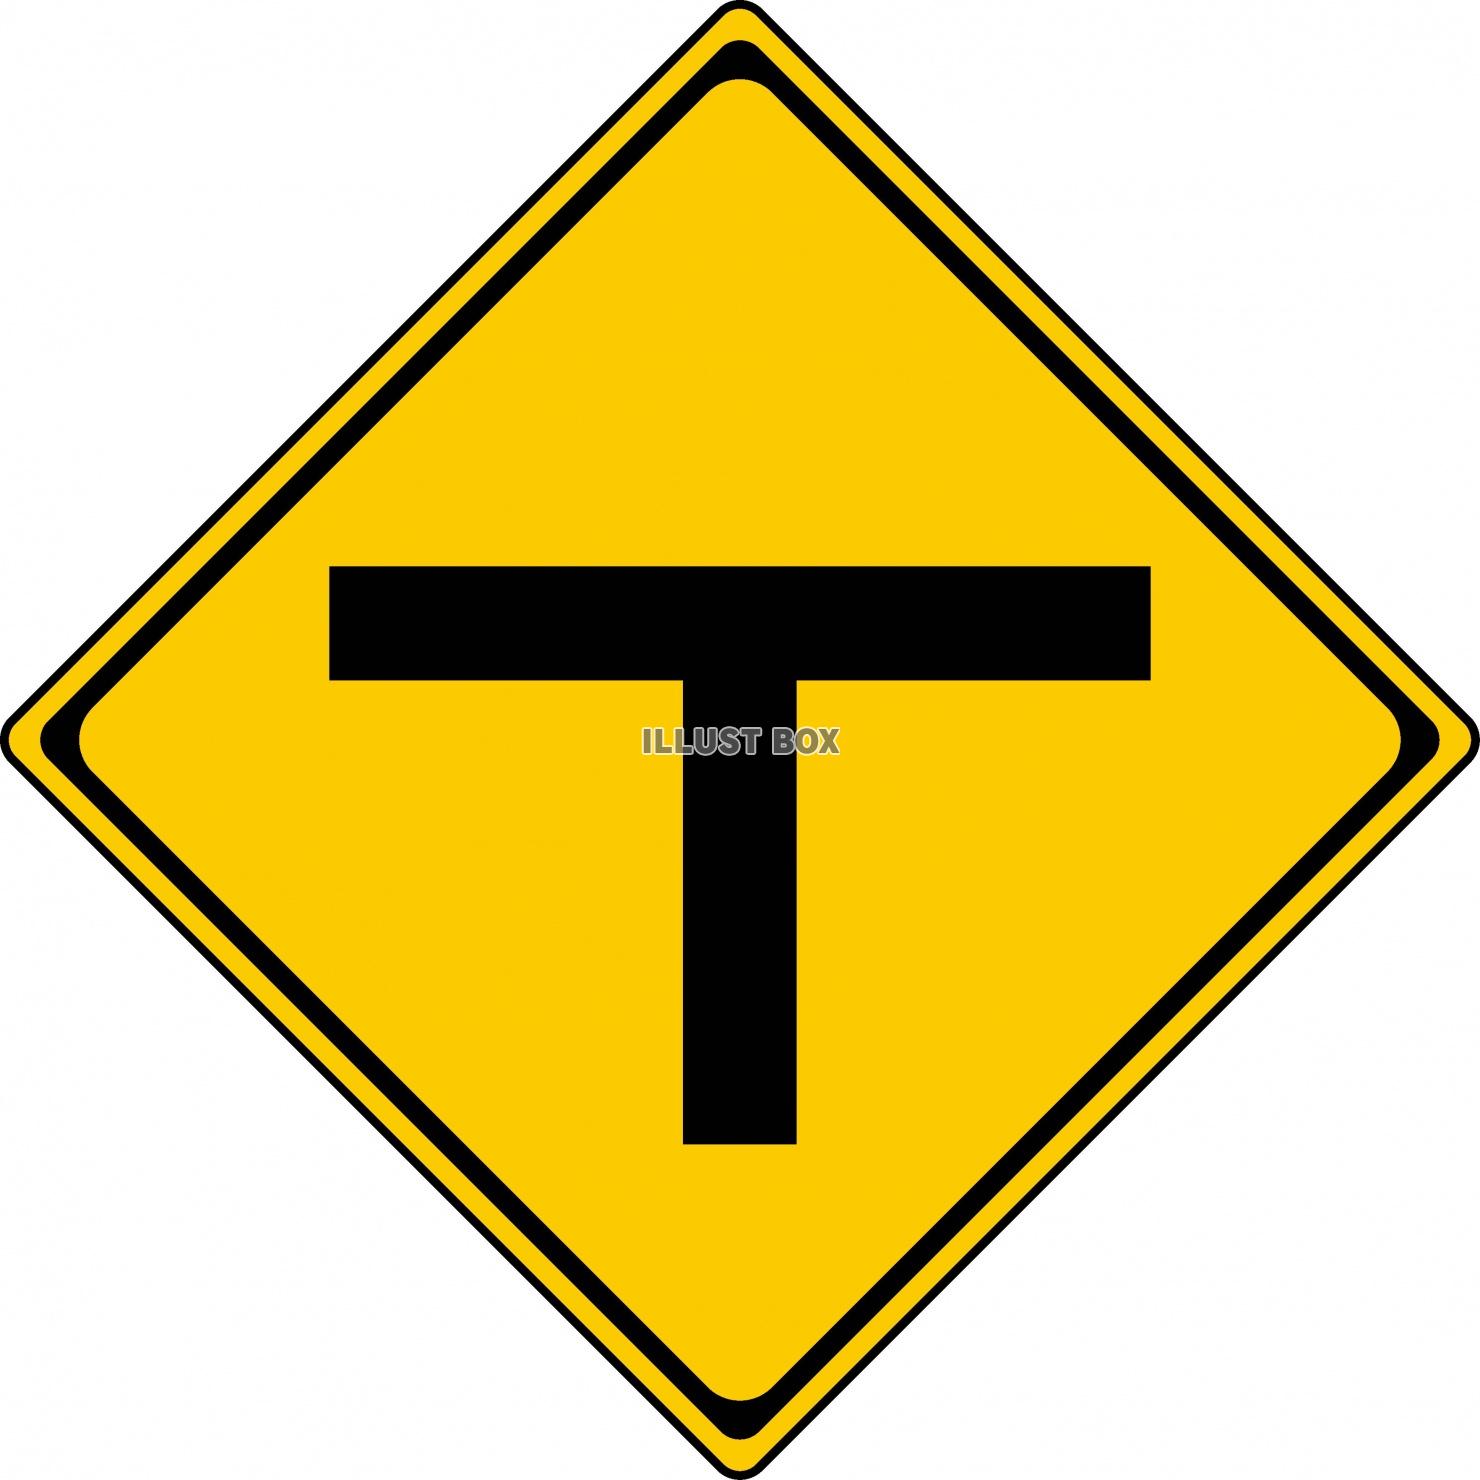 T字路　道路標識